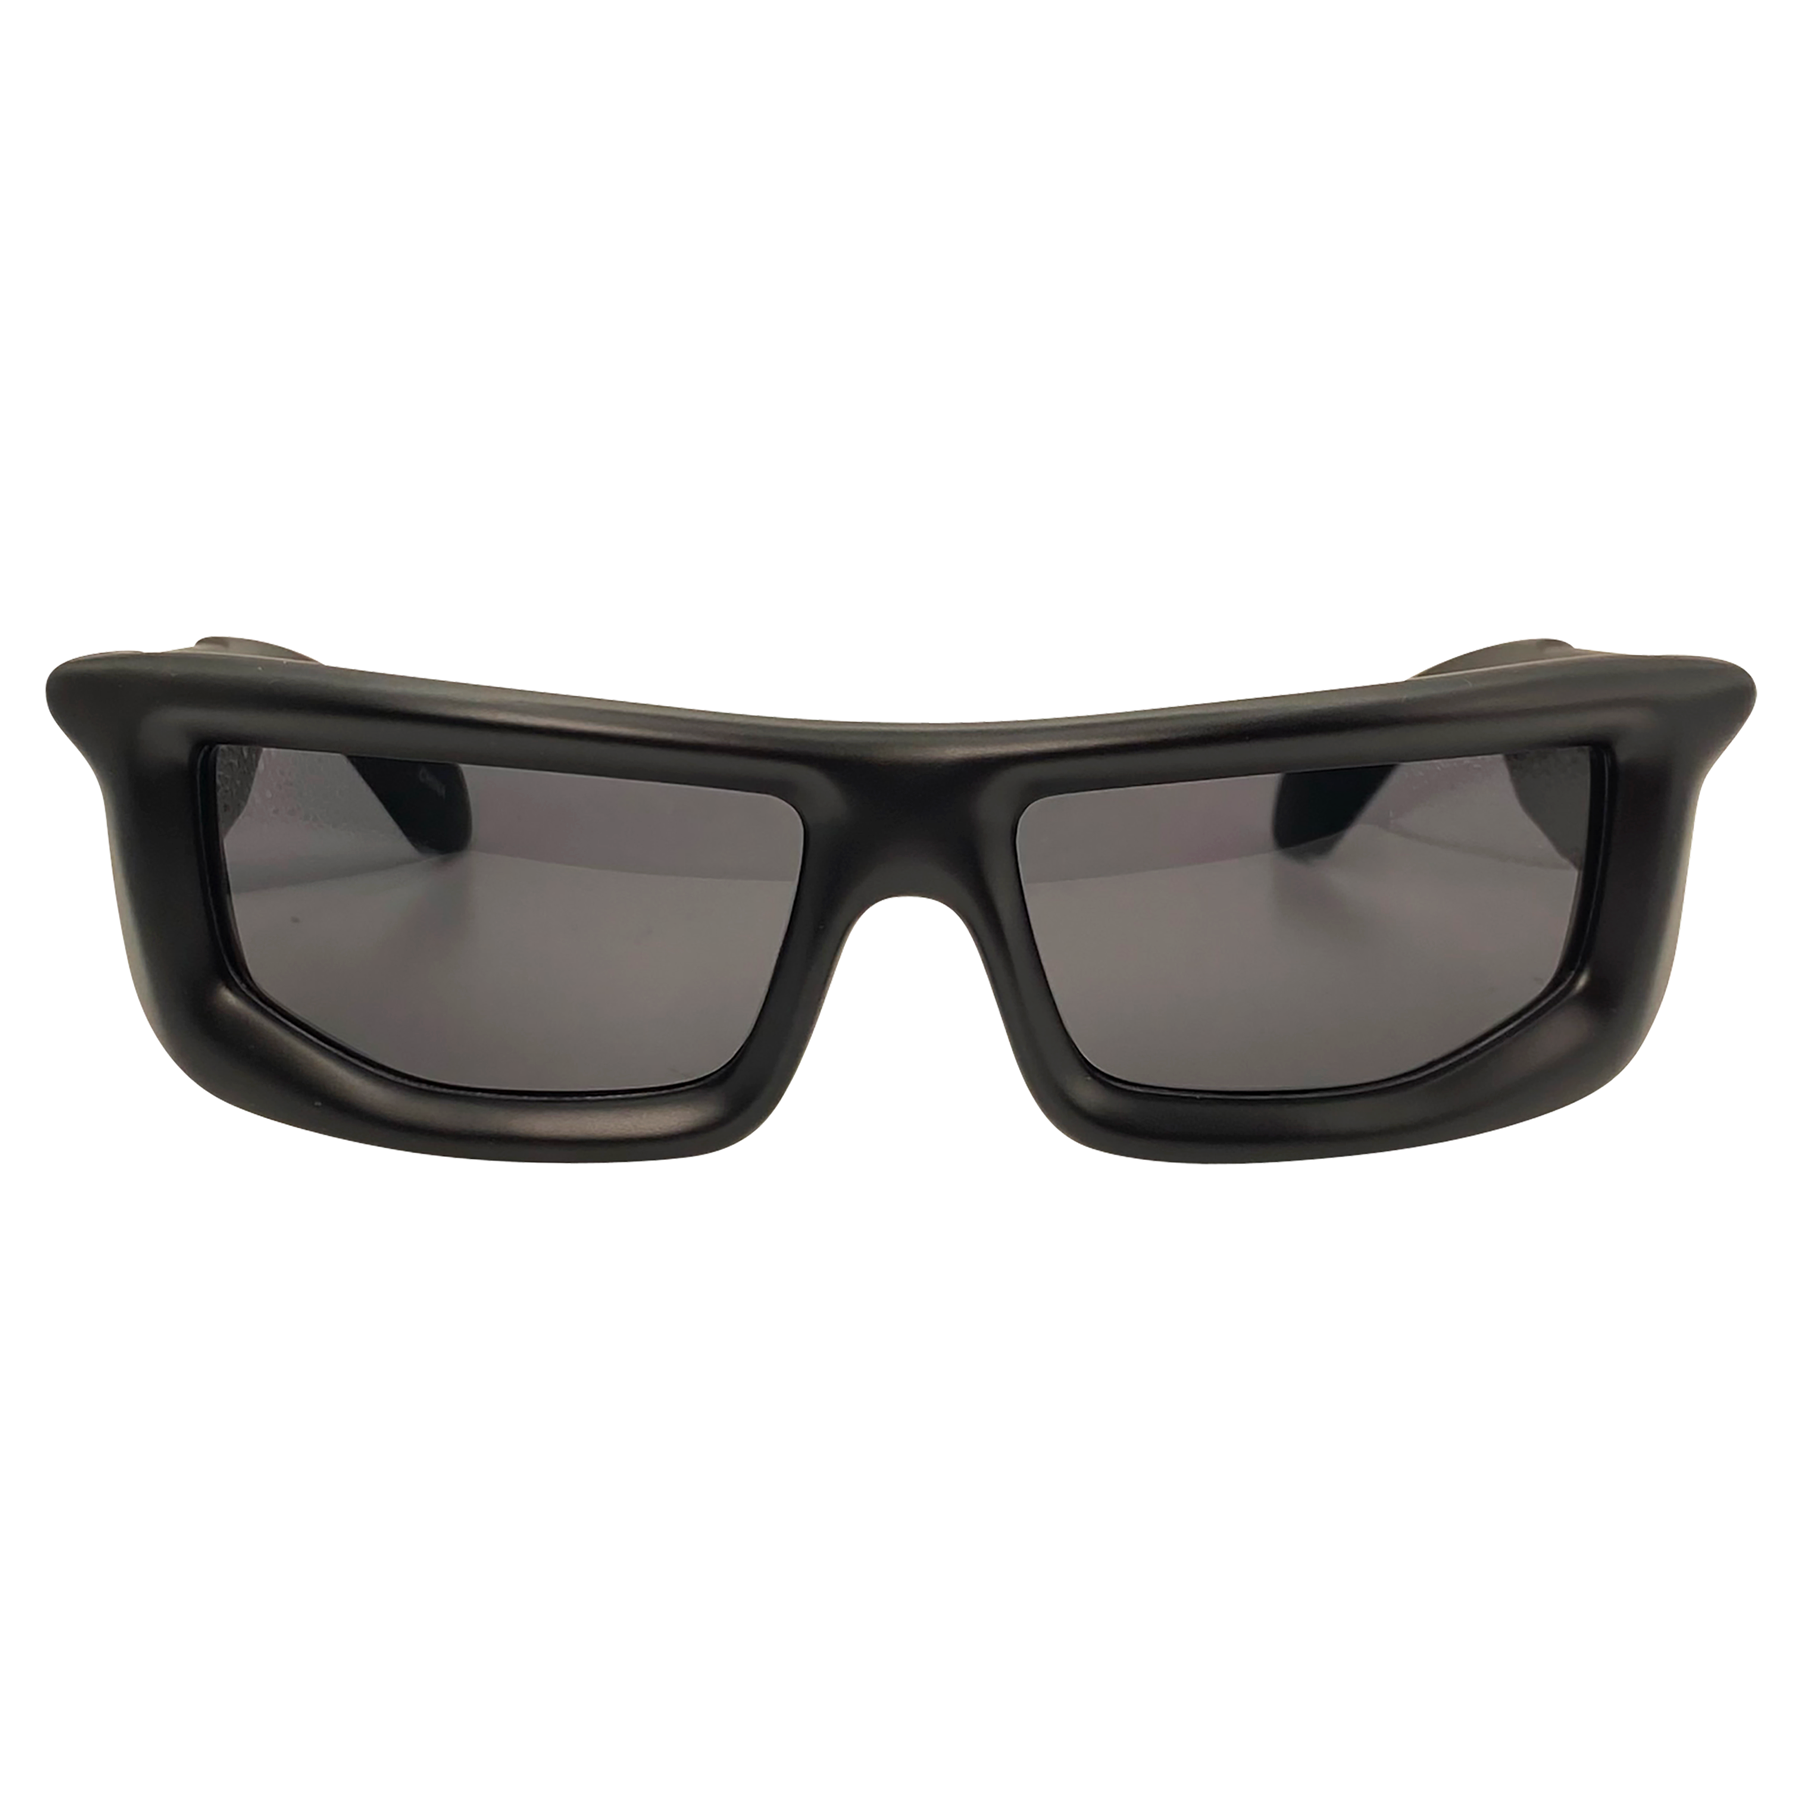 giant sunglasses with unique matte black square style frame